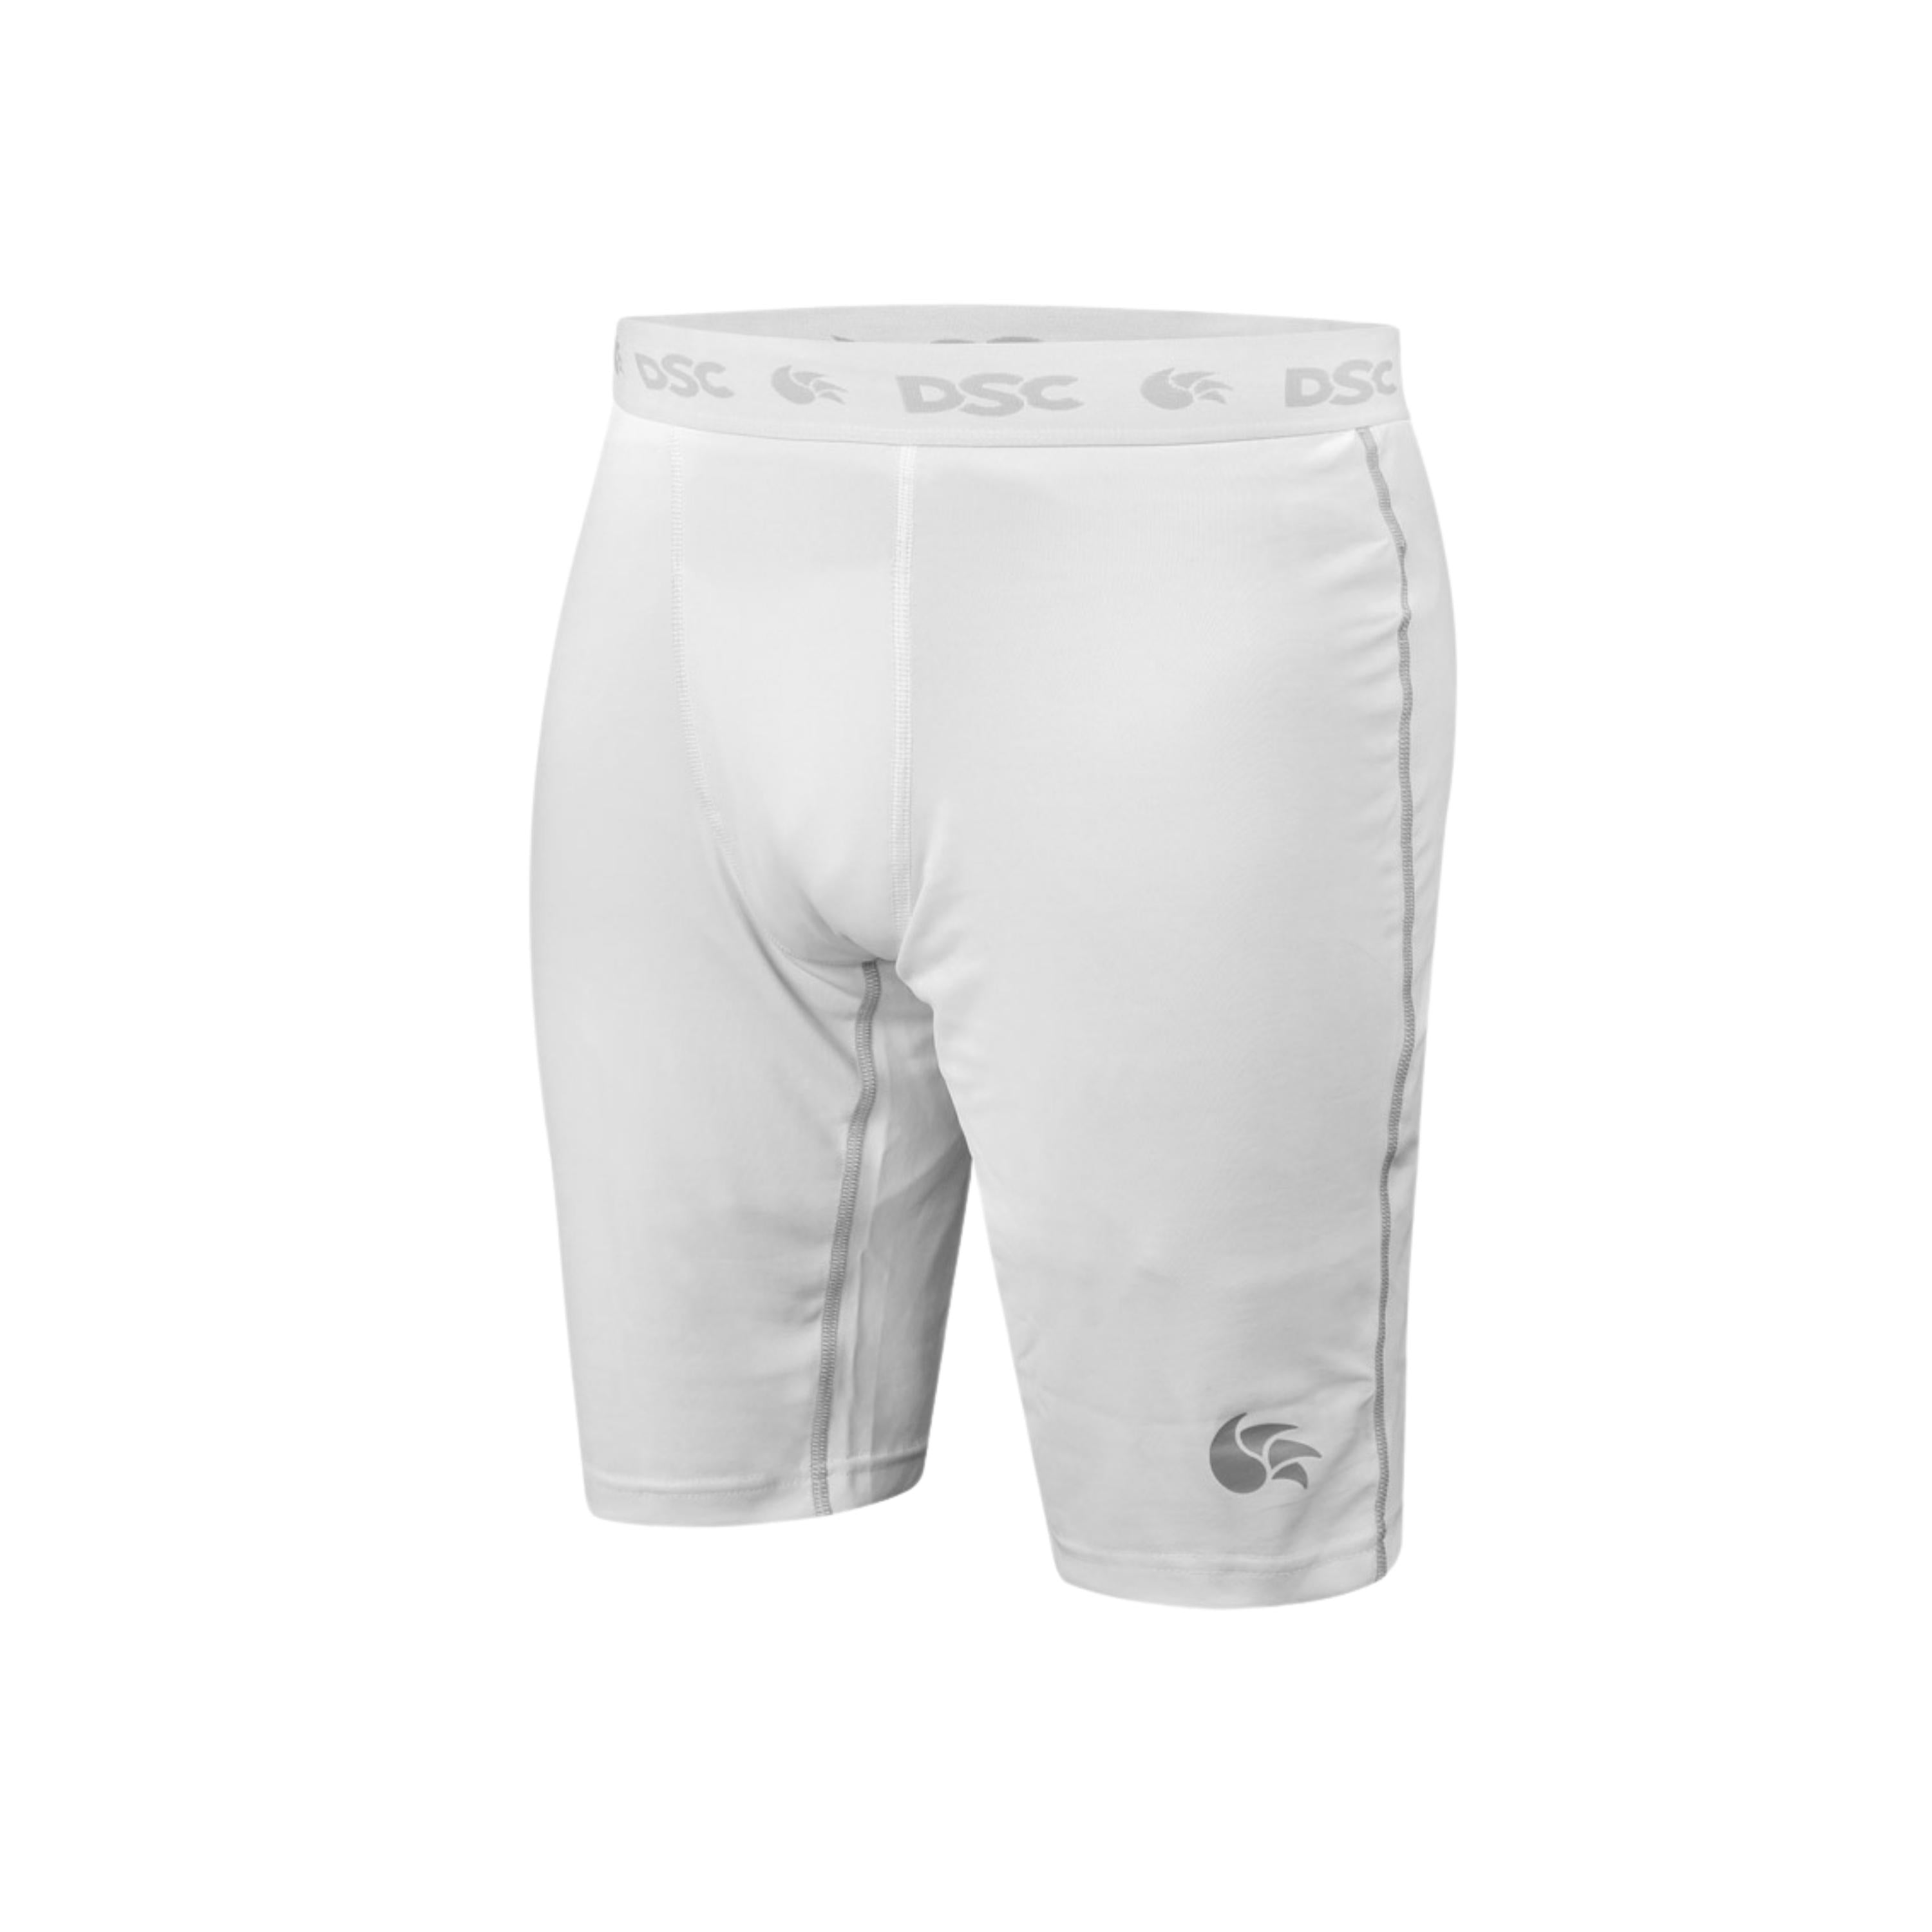 046 | DSC Compression Half Thigh White Shorts